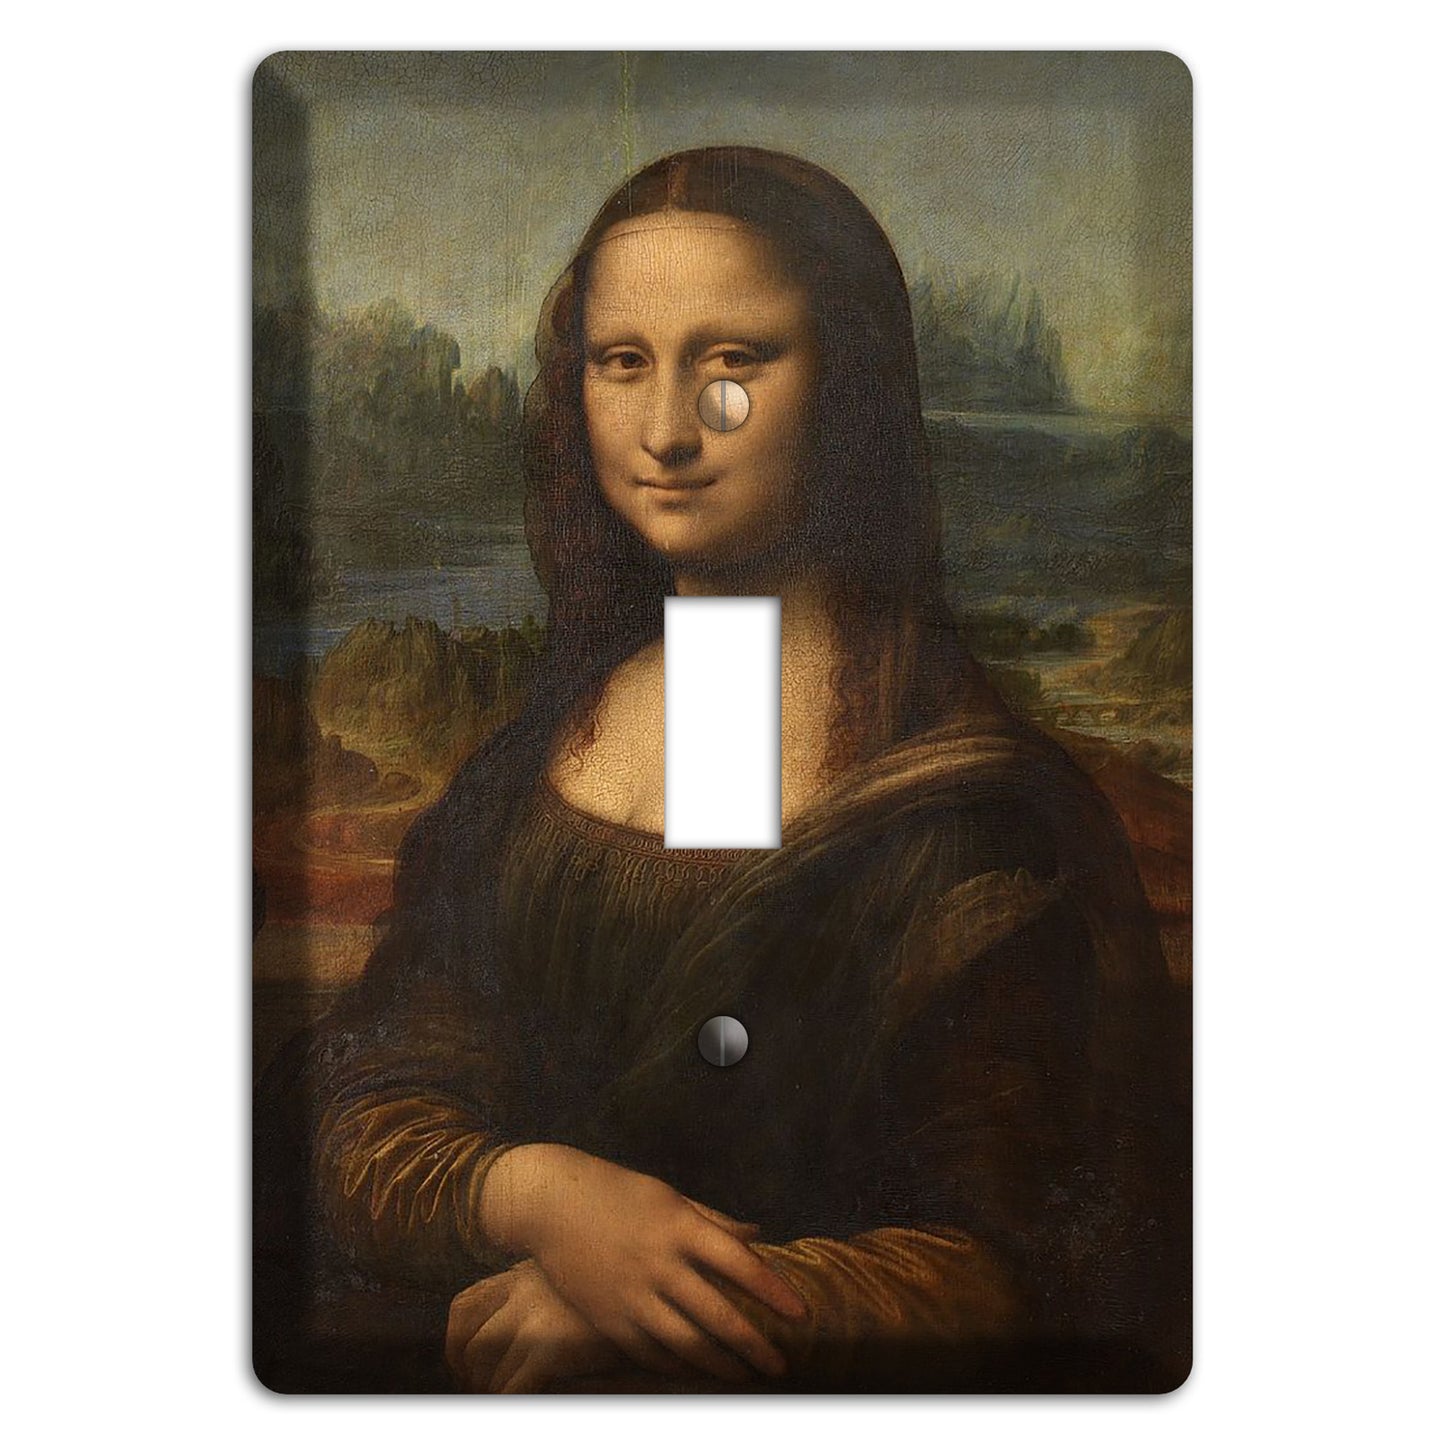 Da Vinci - Mona Lisa Cover Plates